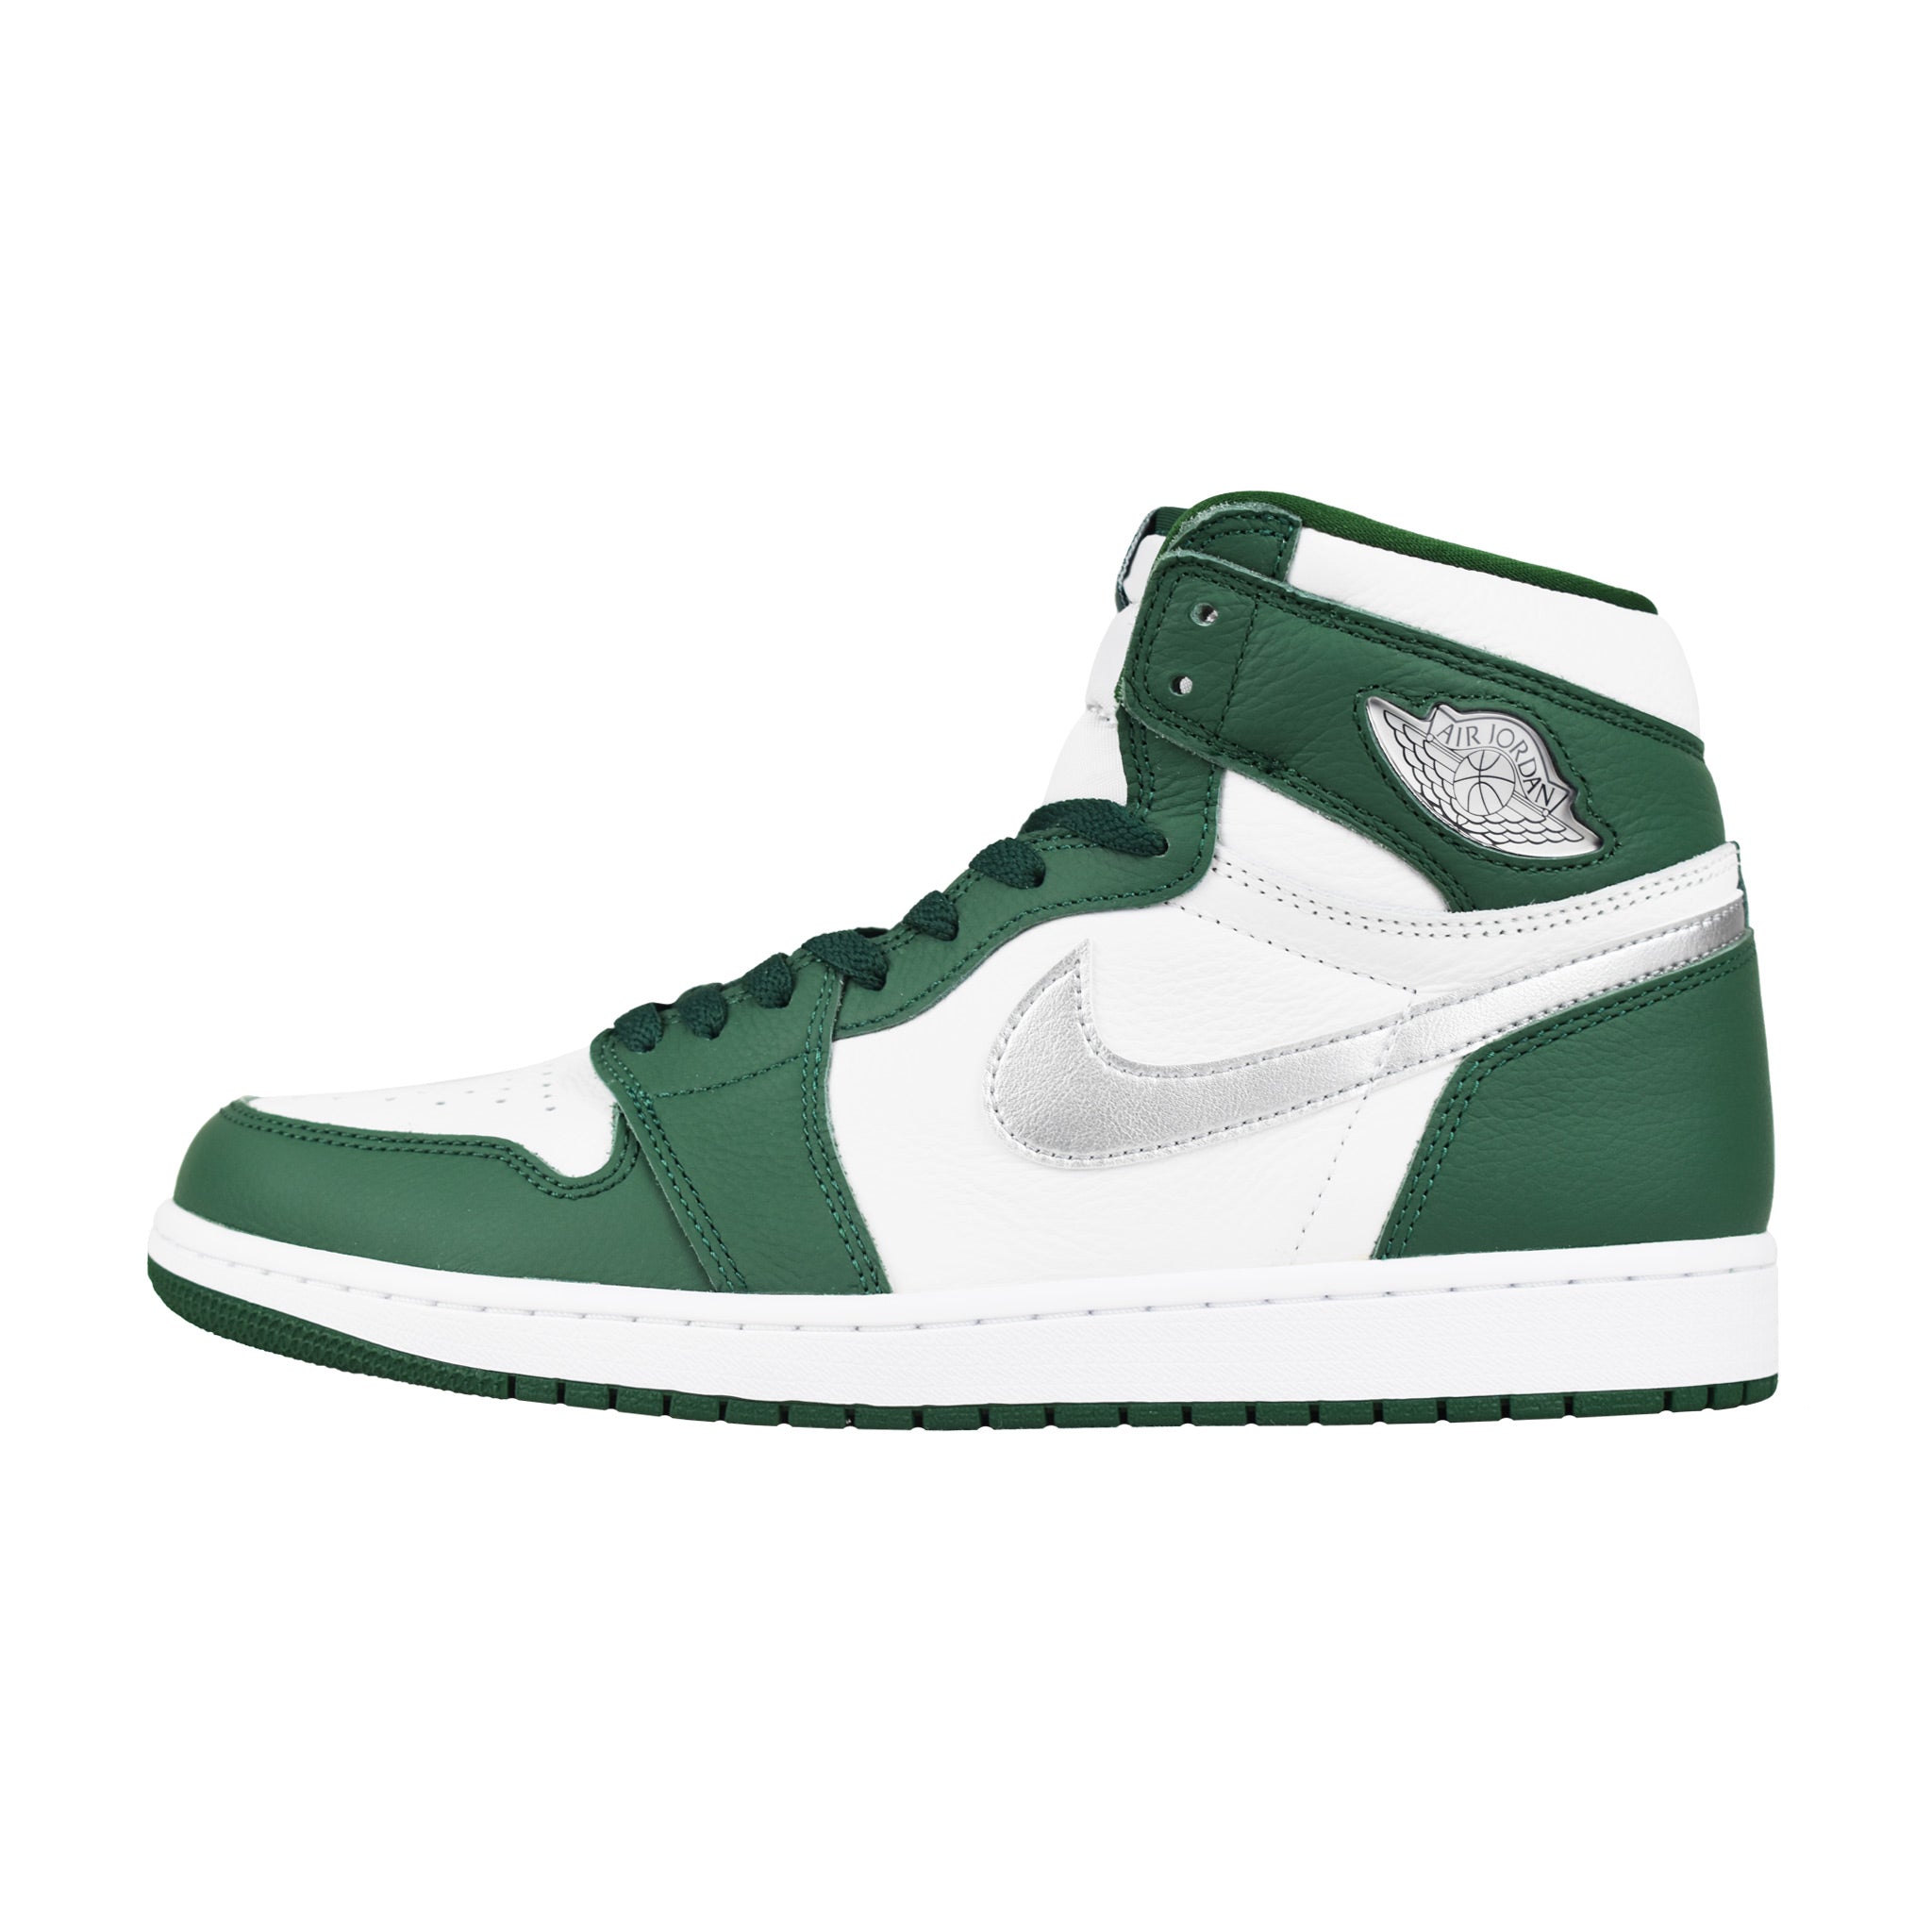 Nike Air Jordan 1 Retro High OG - Gorge Green | Points Streetwear Store ...